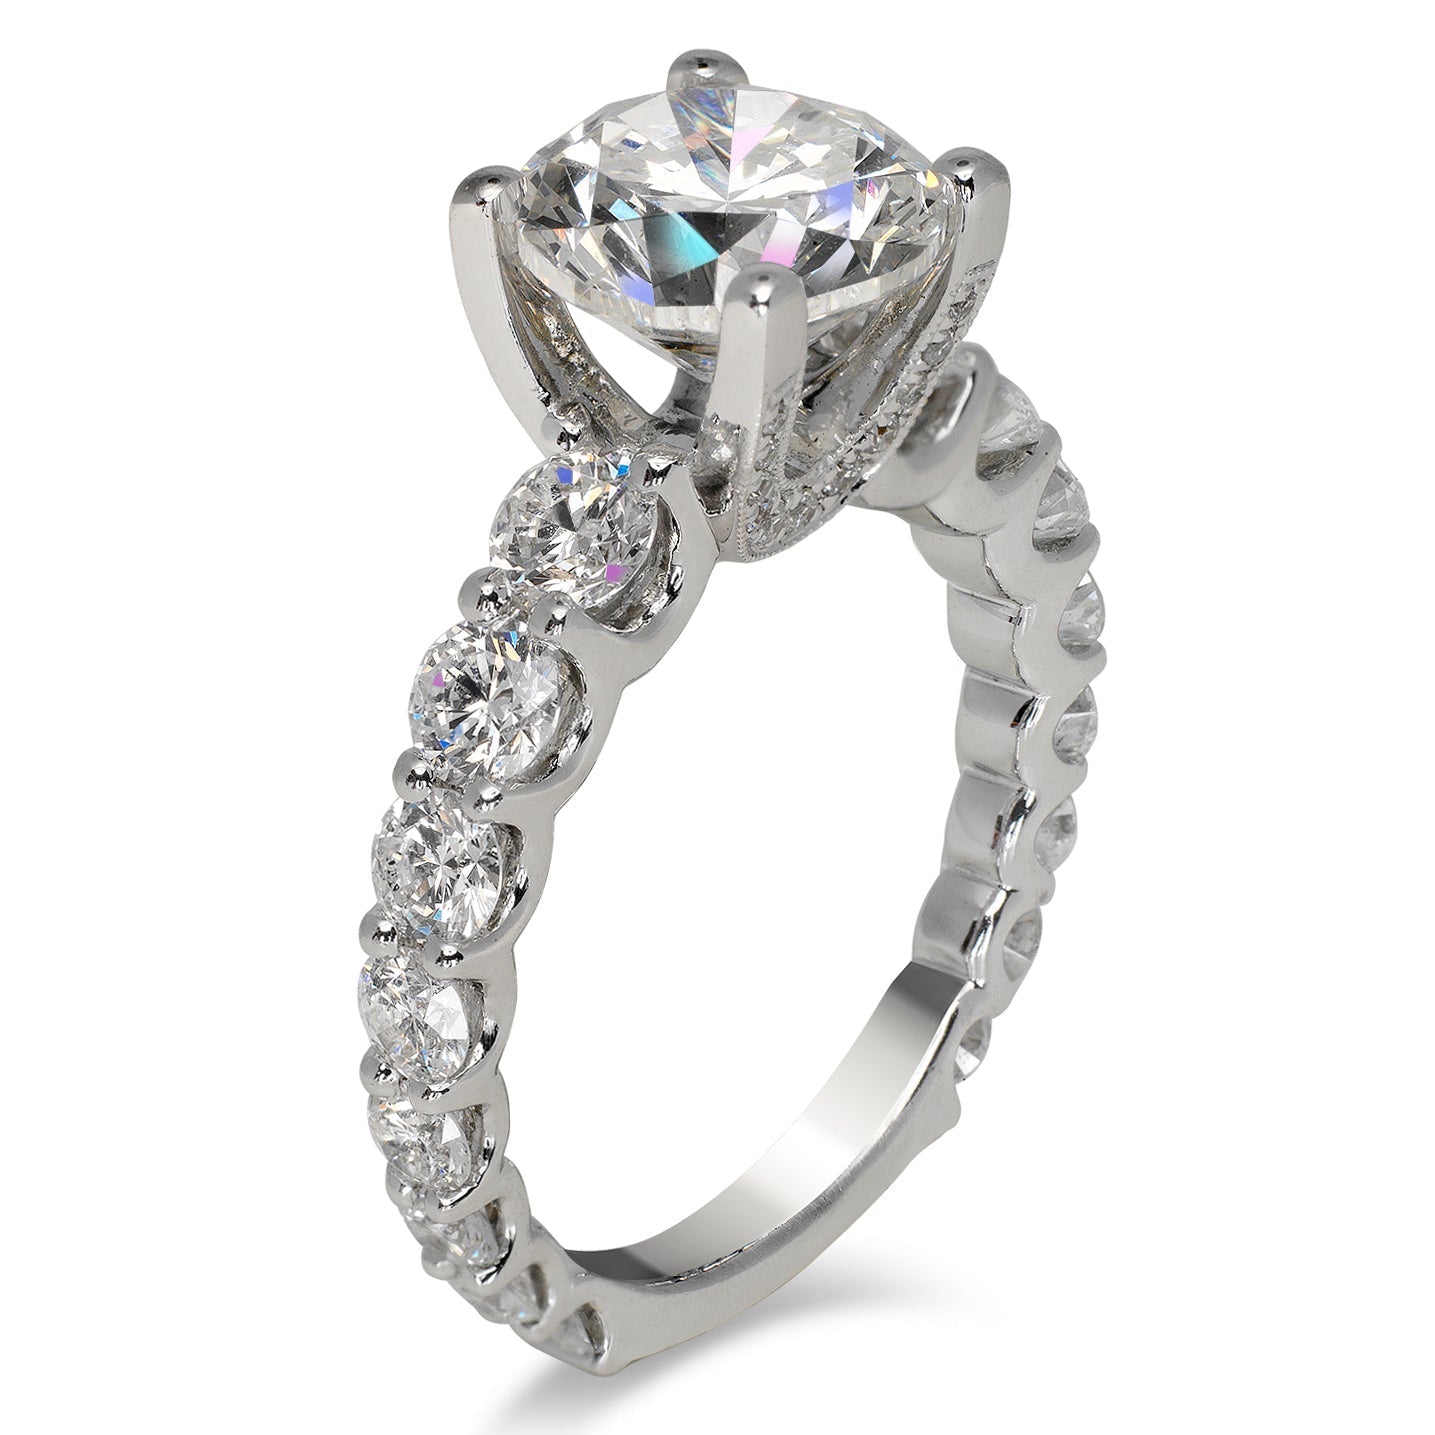 Diamond Ring Round Cut 5 Carat Sidestone Ring in 18K White Gold Side View